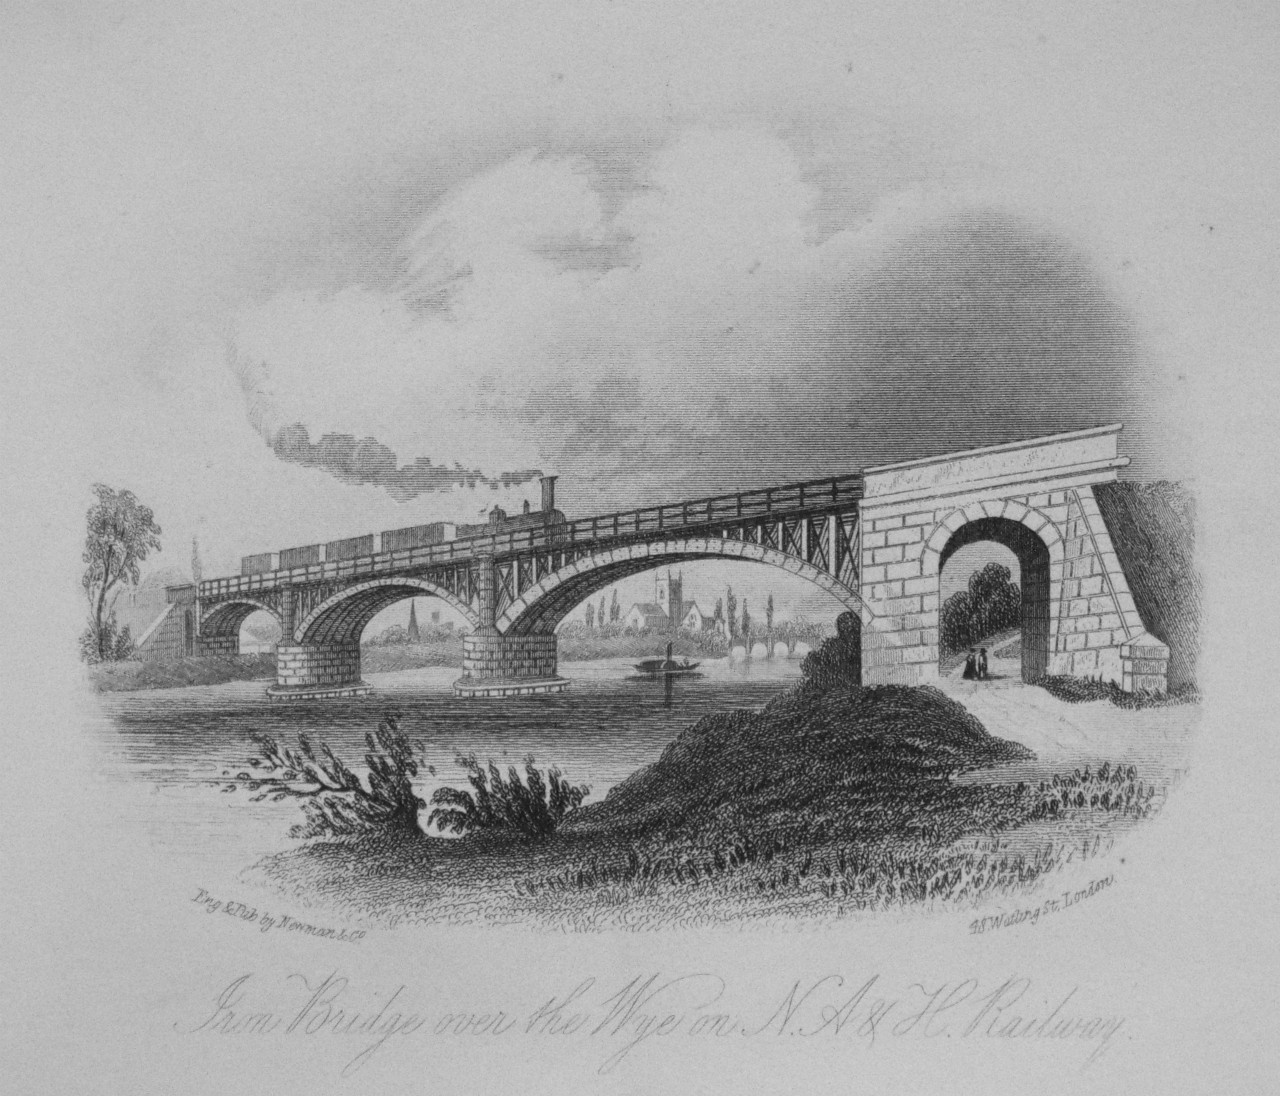 Steel Vignette - Iron Bridge over the Wye on N. A & H. Railway. - Newman